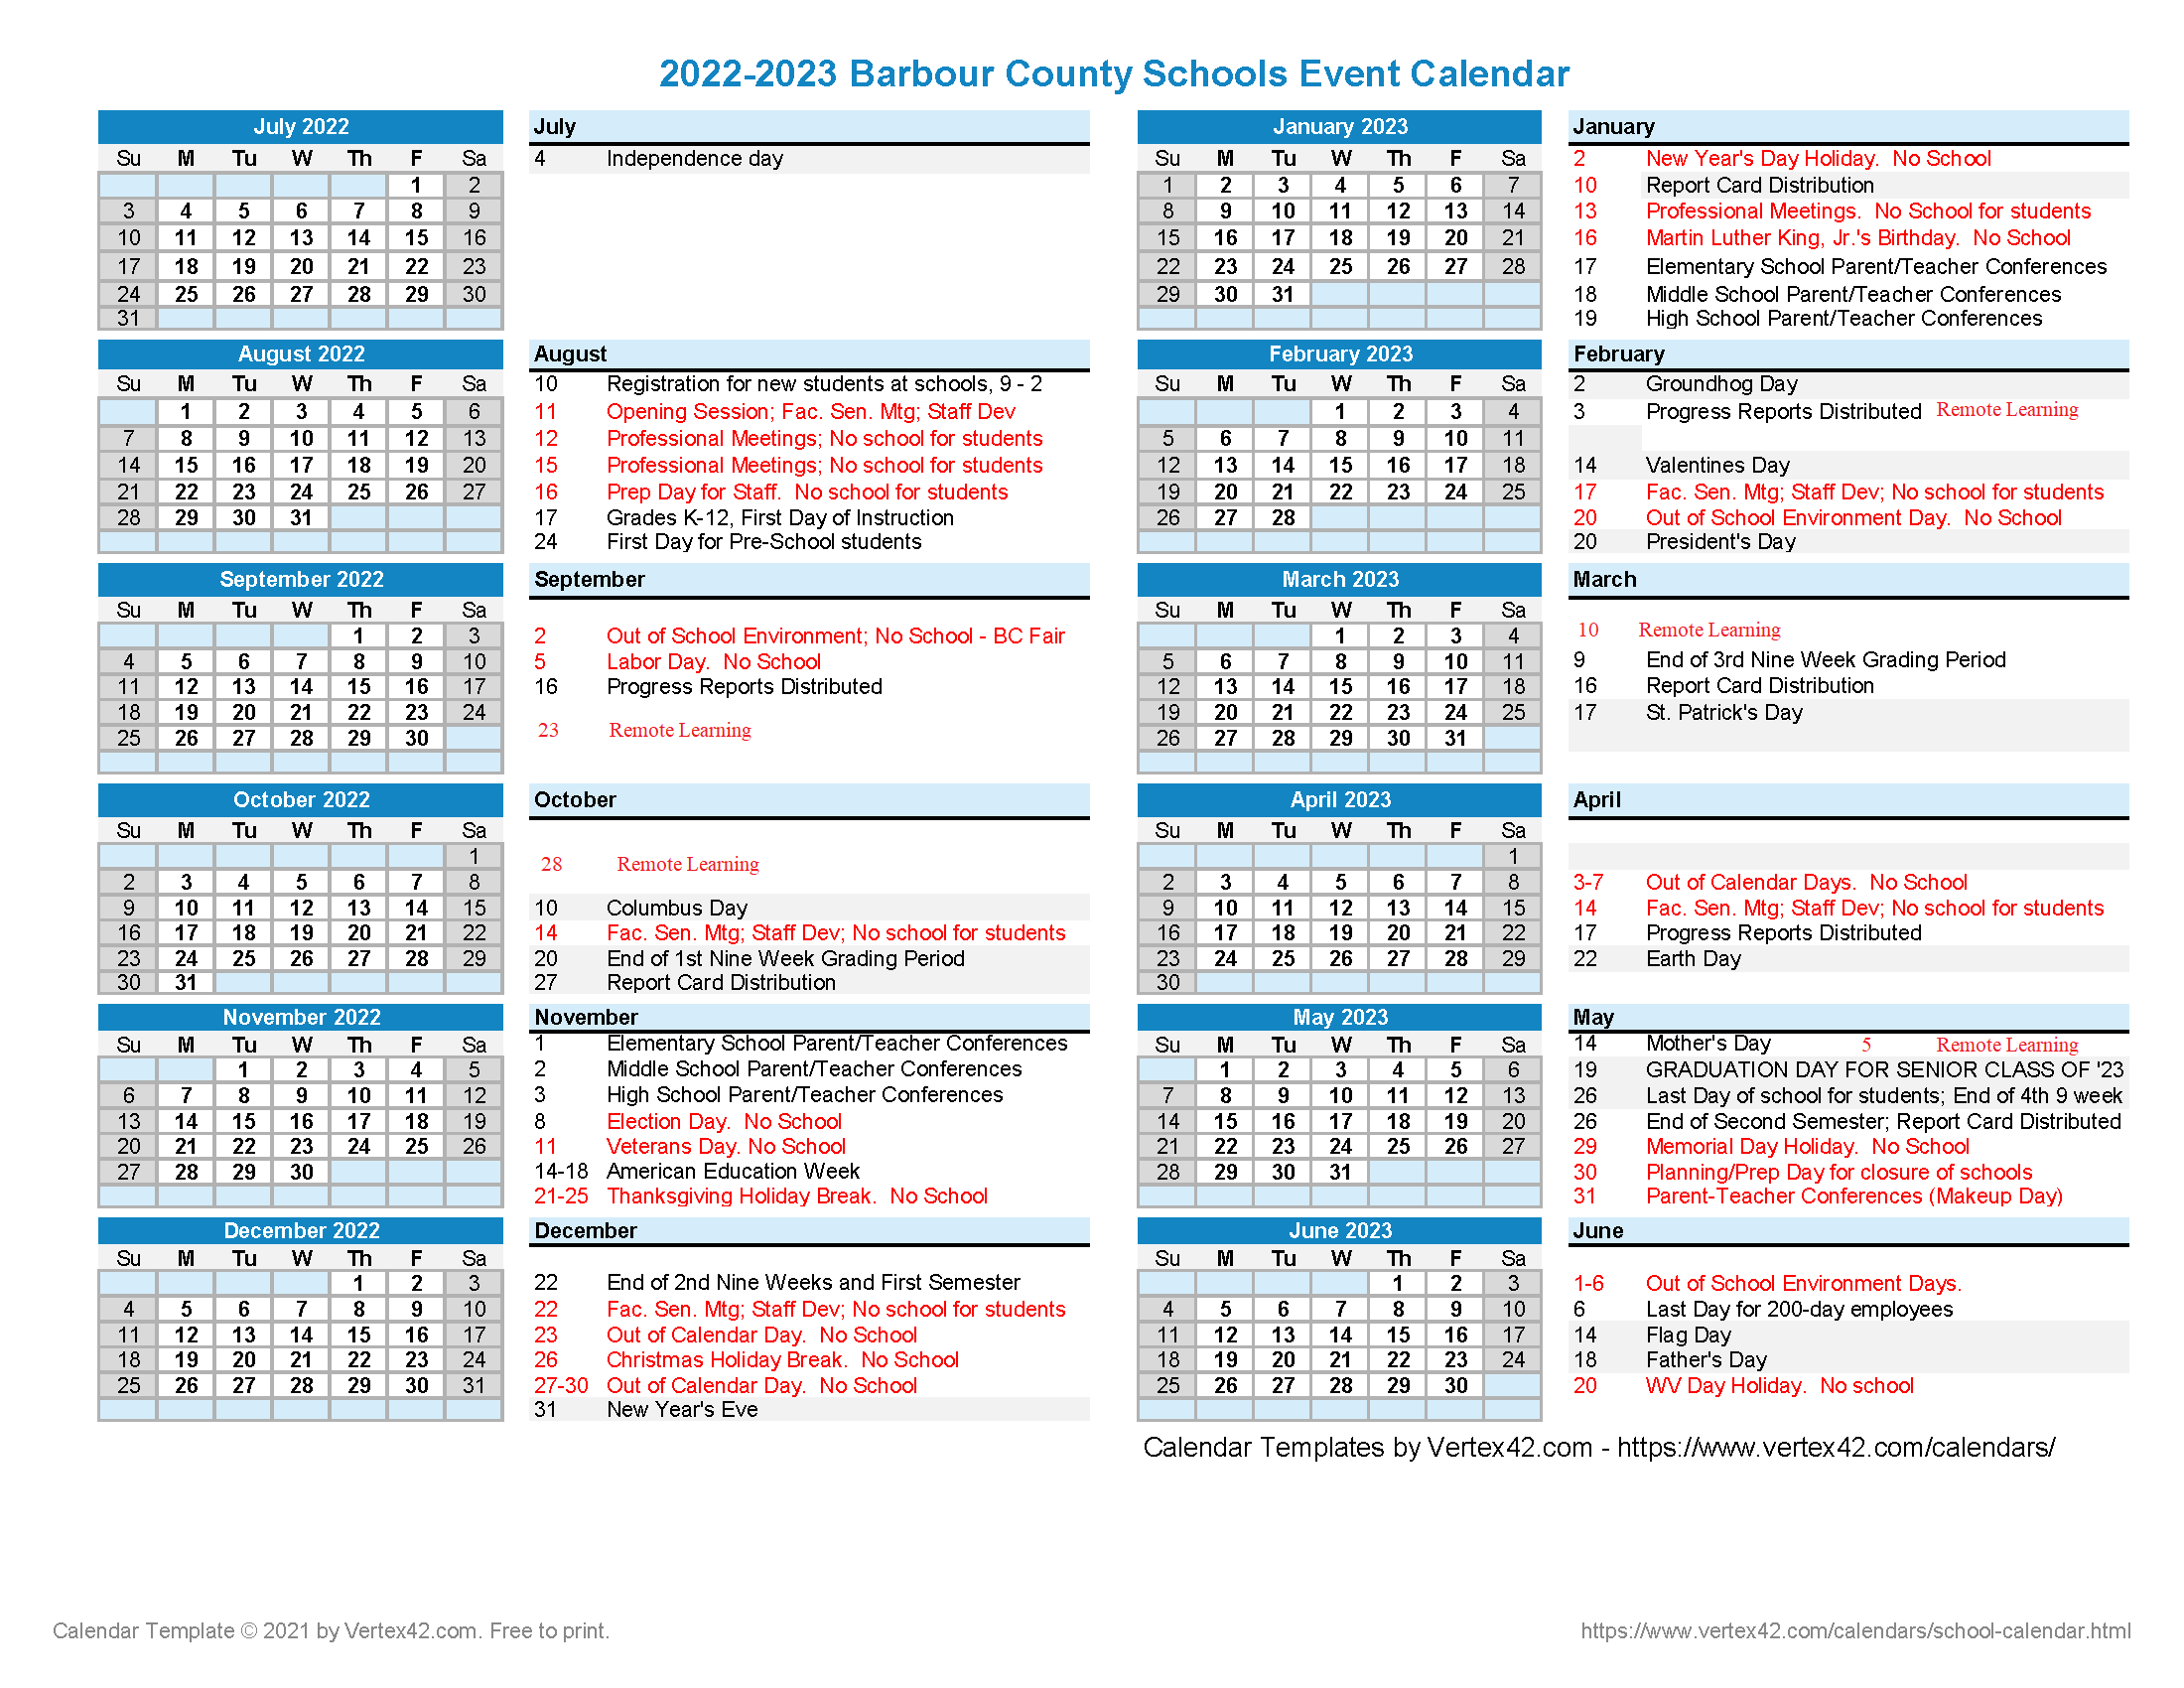 2022-2023 Calendar Synopsis